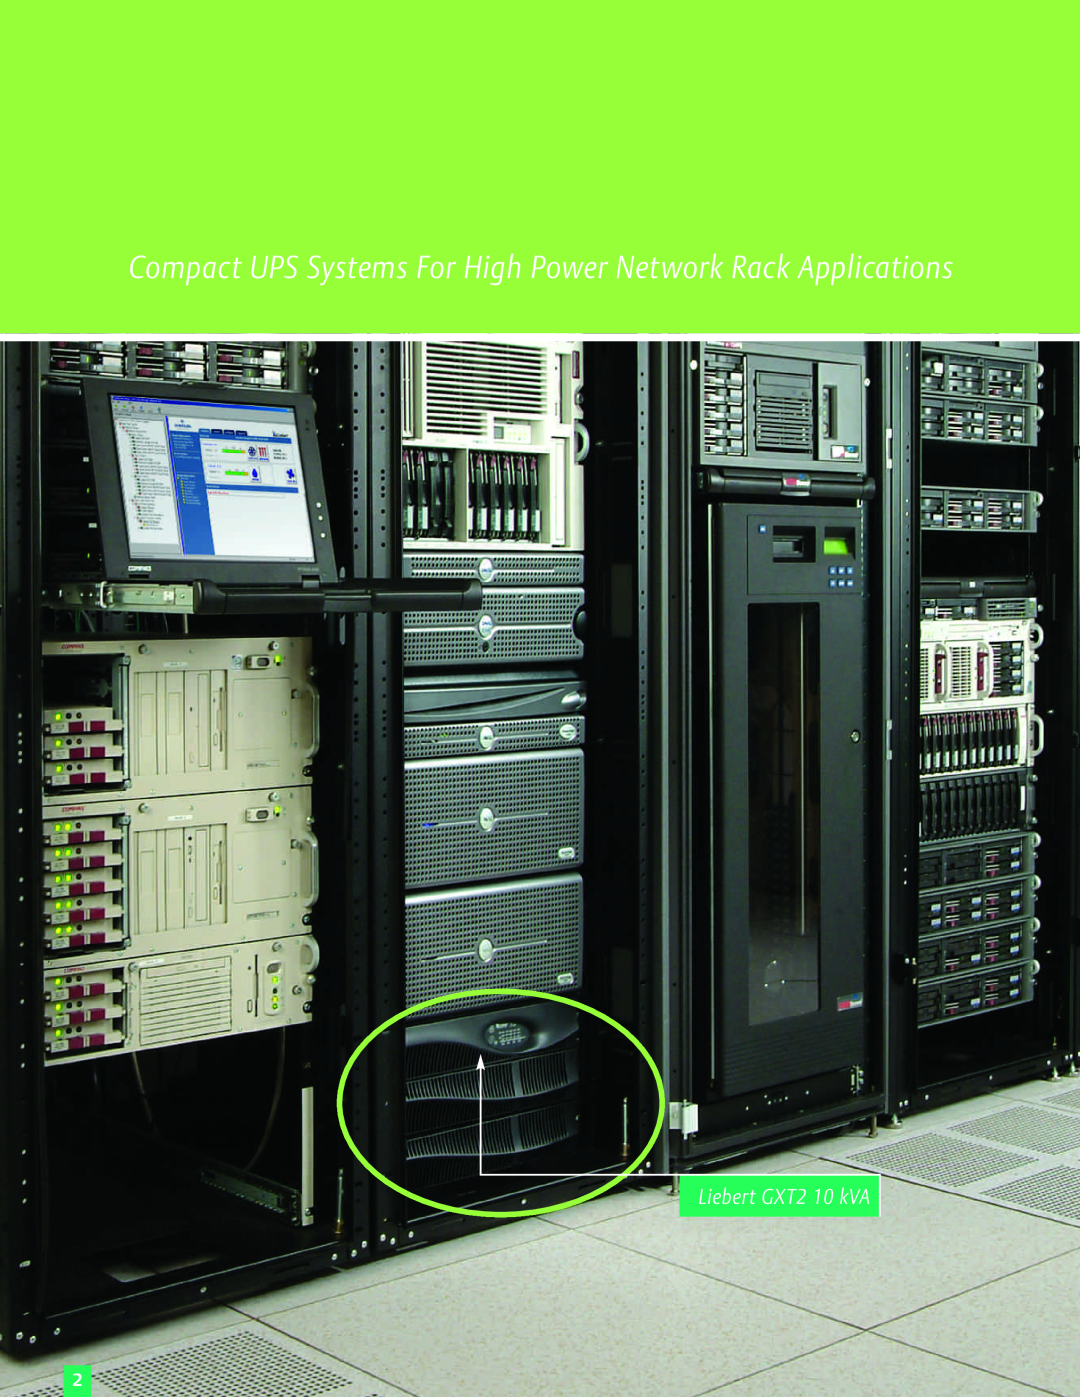 Emerson 6 kVA manual Compact UPS Systems For High Power Network Rack Applications, Liebert GXT2 10 kVA 